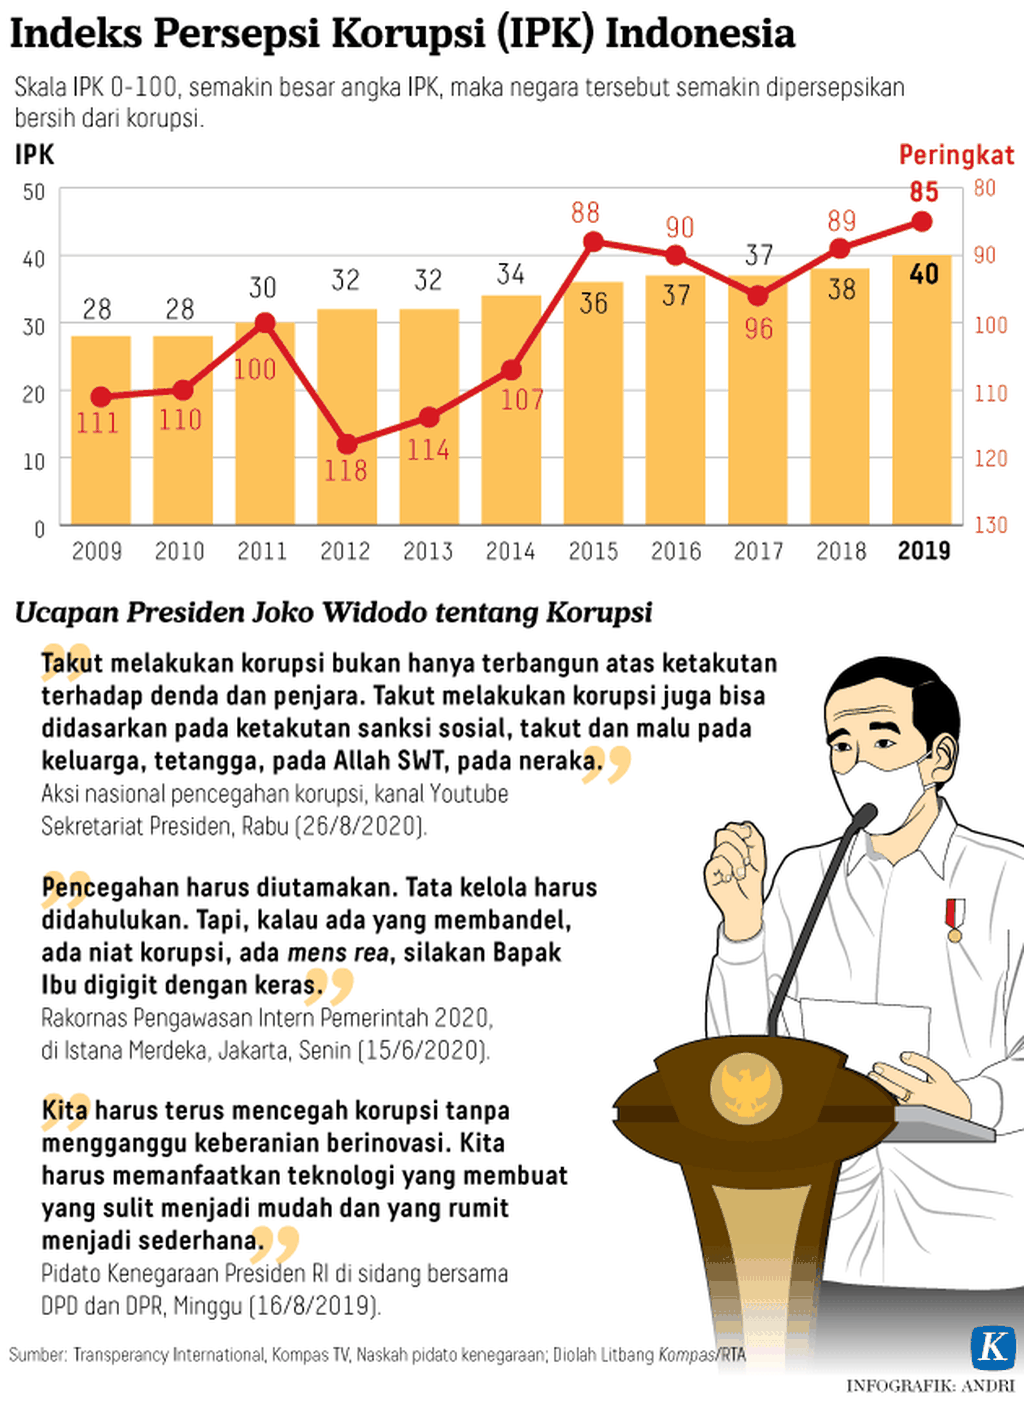 Infografik Indeks Persepsi Korupsi (IPK) Indonesia, Ucapan Presiden Joko Widodo tentang Korupsi.